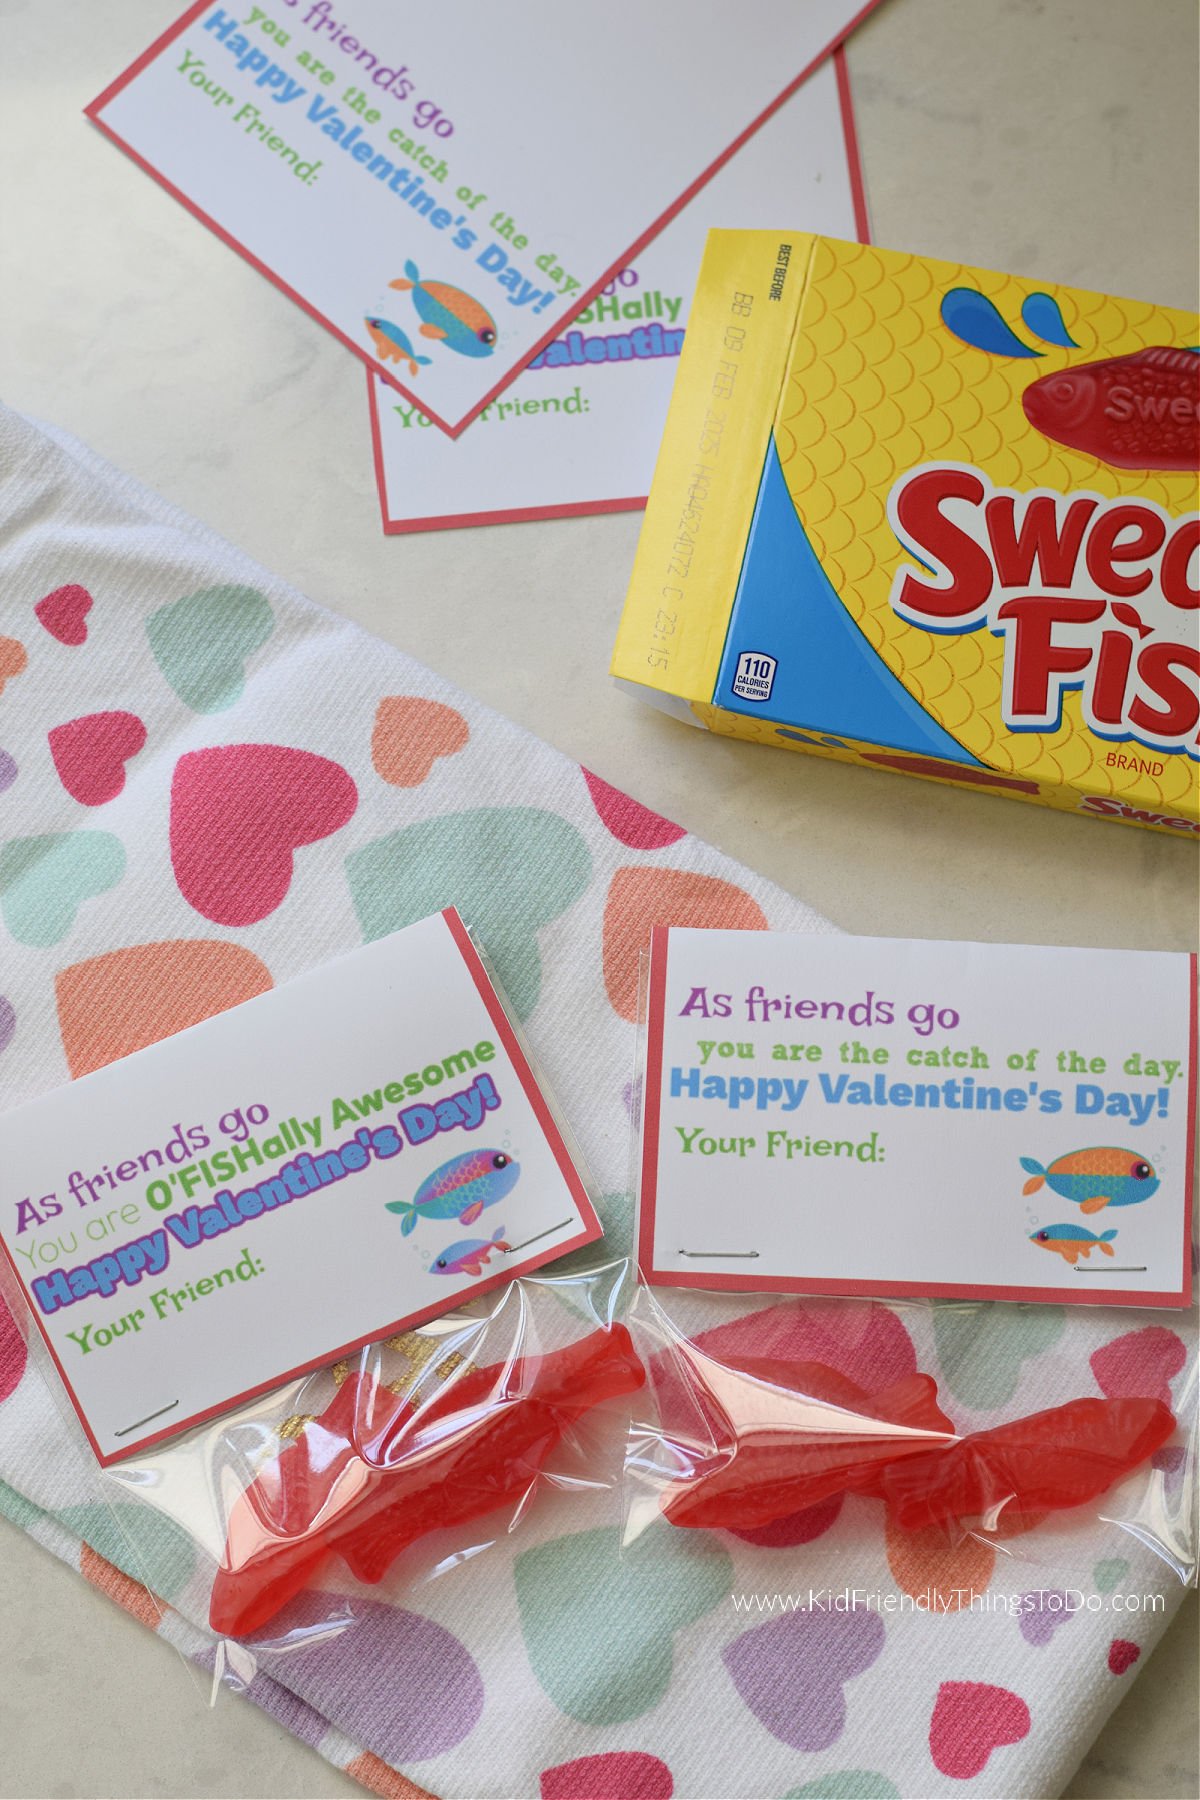 Swedish fish Valentine's Day cards 